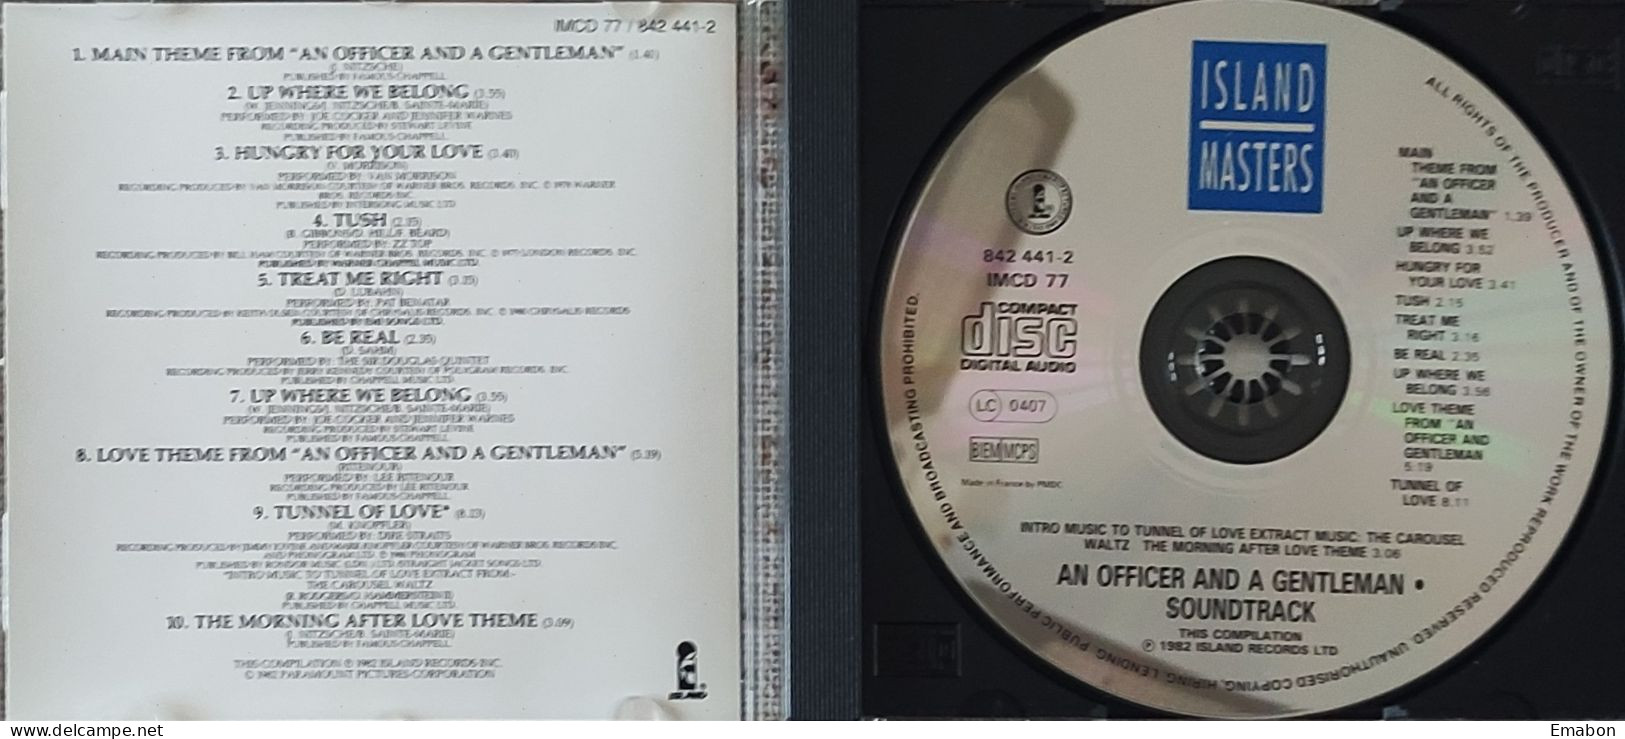 BORGATTA - FILM MUSIC  - Cd  RIDLEY SCOTT - AN OFFICER AND A GENTLEMAN - ISLAND MASTERS 1995 - USATO In Buono Stato - Filmmuziek